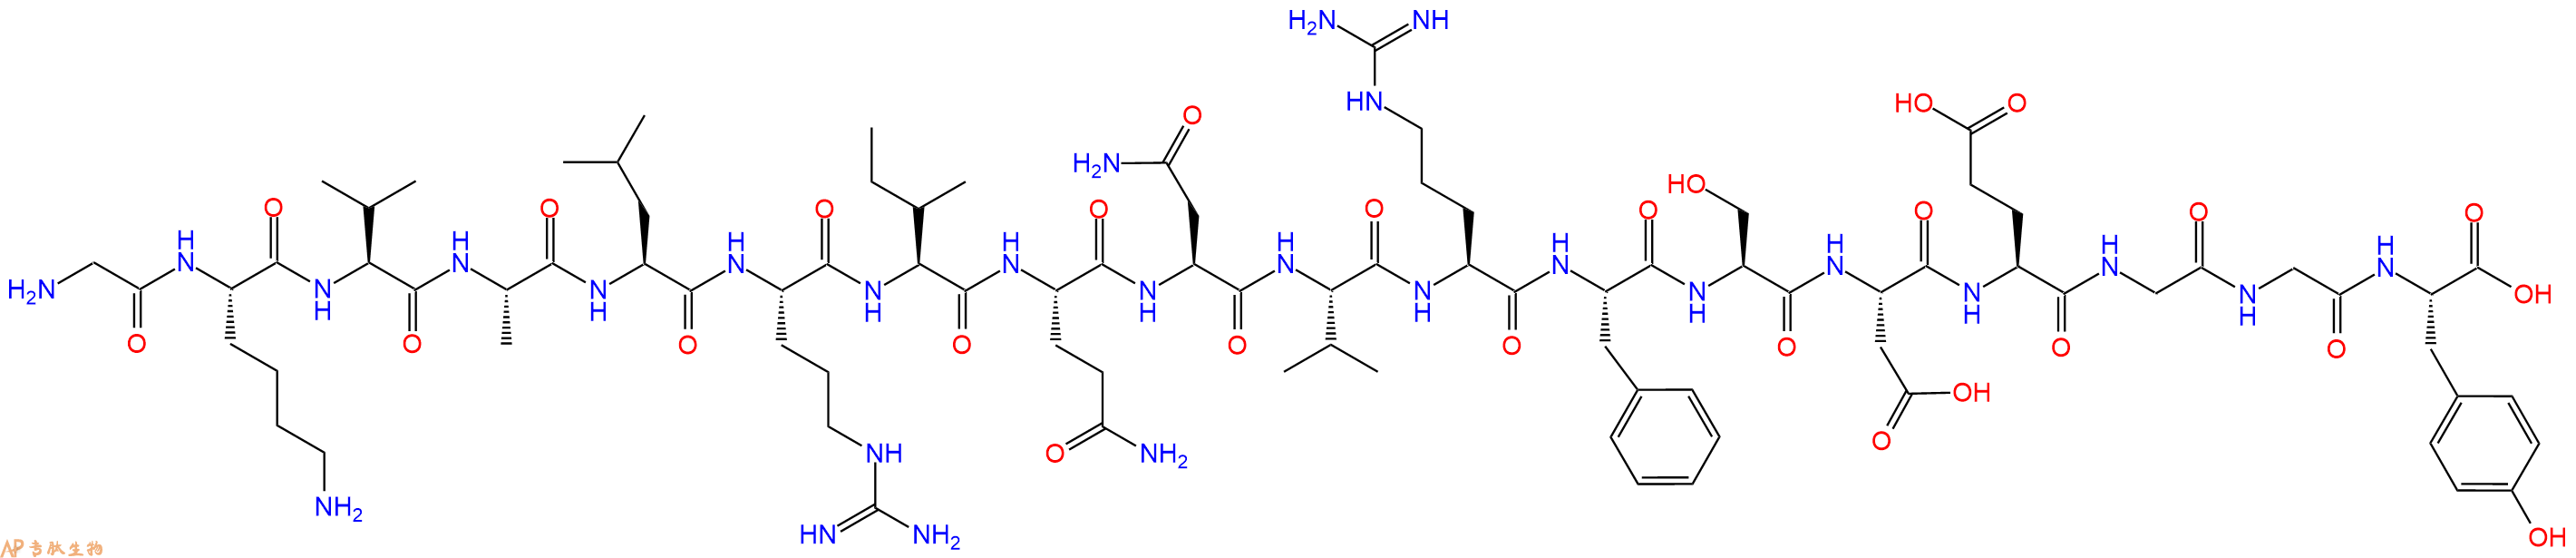 专肽生物产品MyelinOligodendrocyteGlyco Protein Peptide (79-96